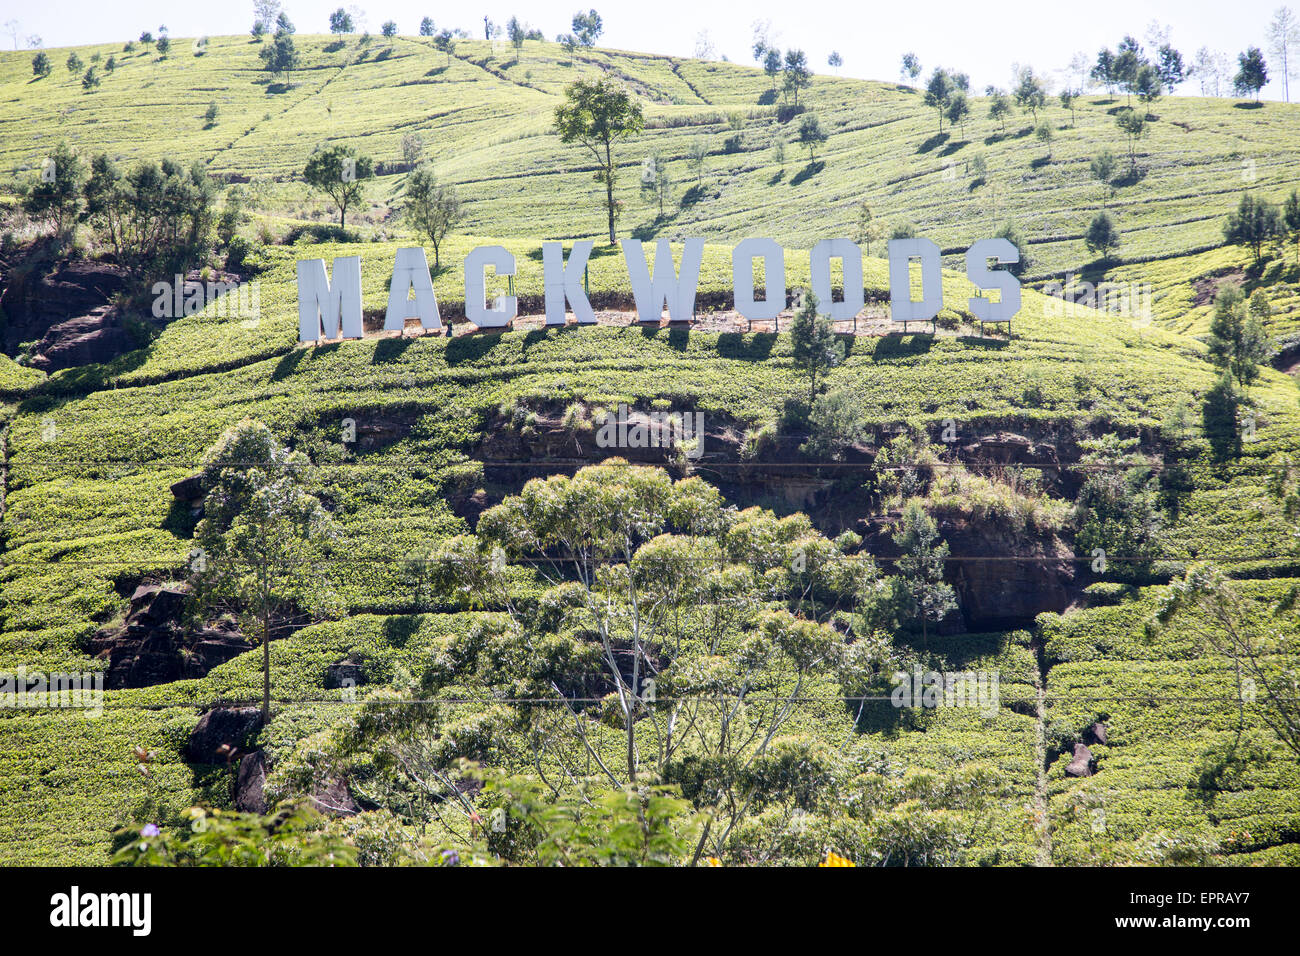 Mackwoods tea estate sign, Nuwara Eliya, Central Province, Sri Lanka, Asia Stock Photo